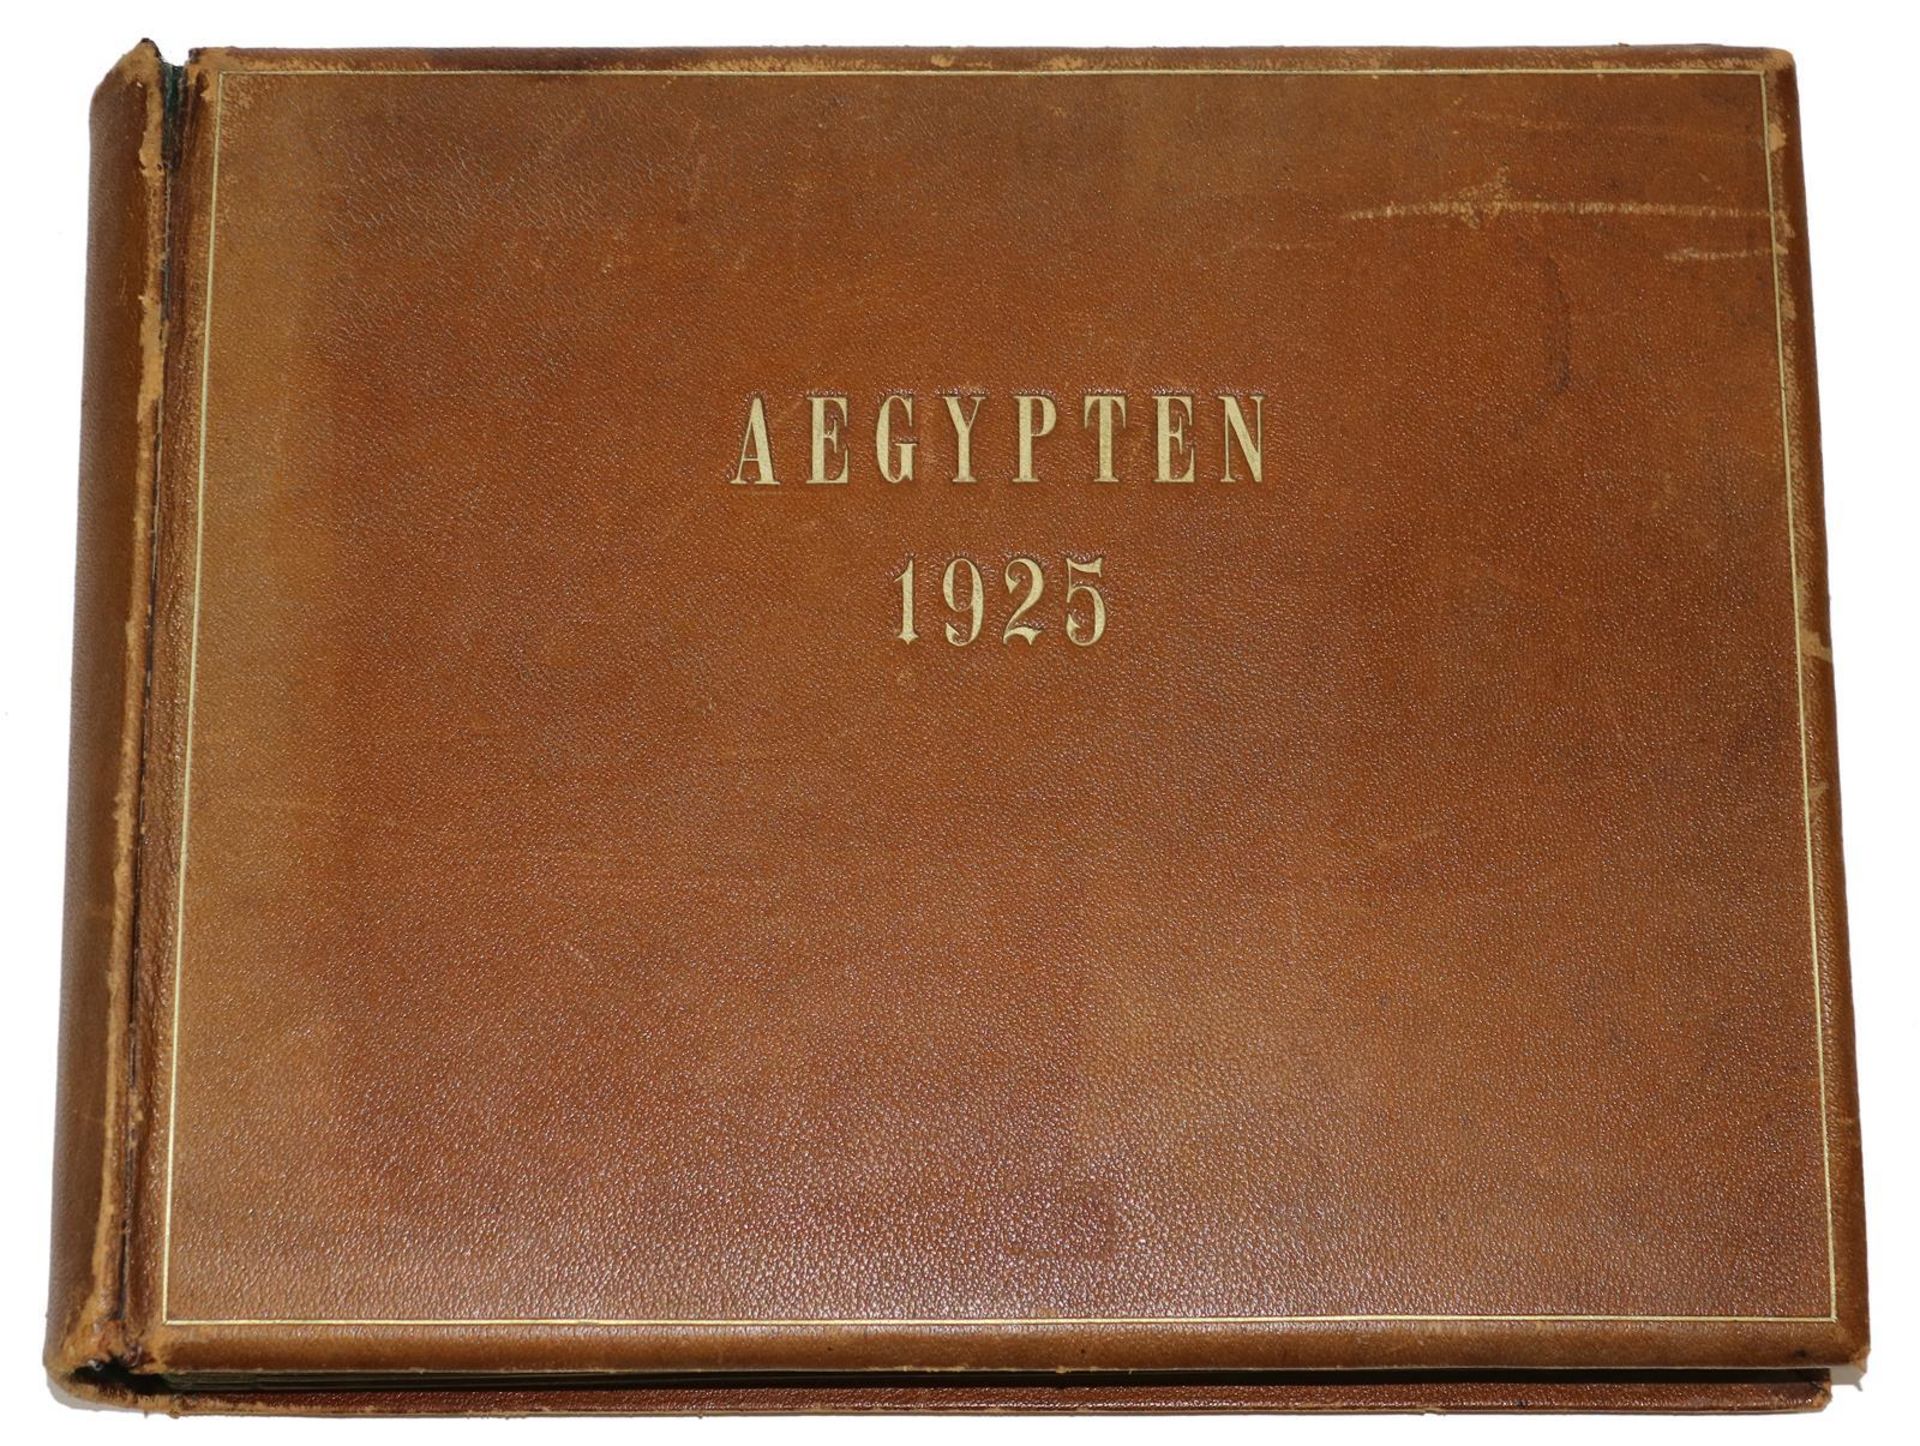 Aegypten 1925 - Image 3 of 3